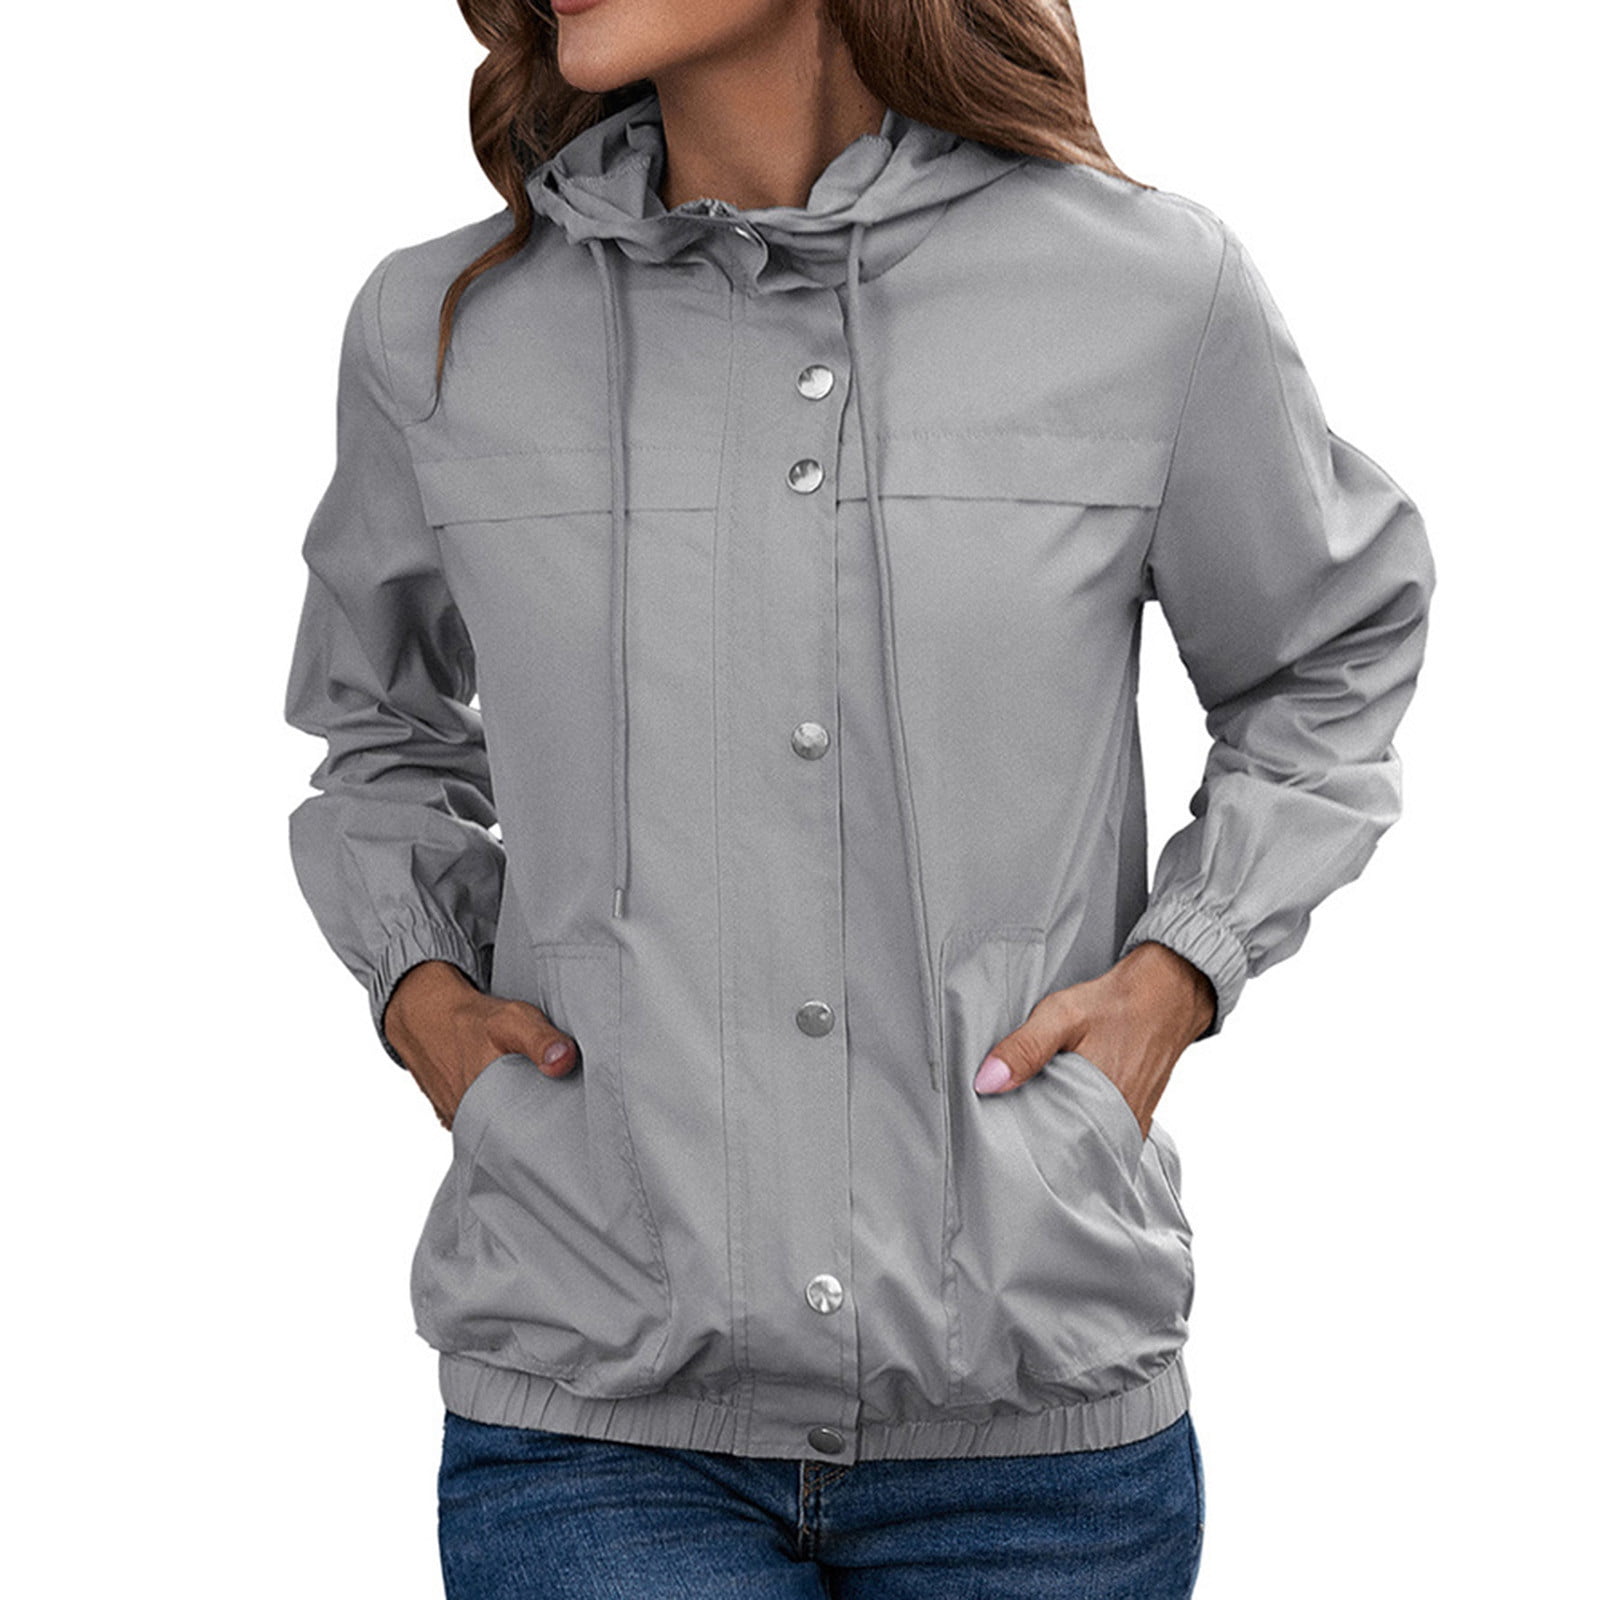 Lightweight Rain Jacket Women Packable Raincoats for Adults Fashion ...